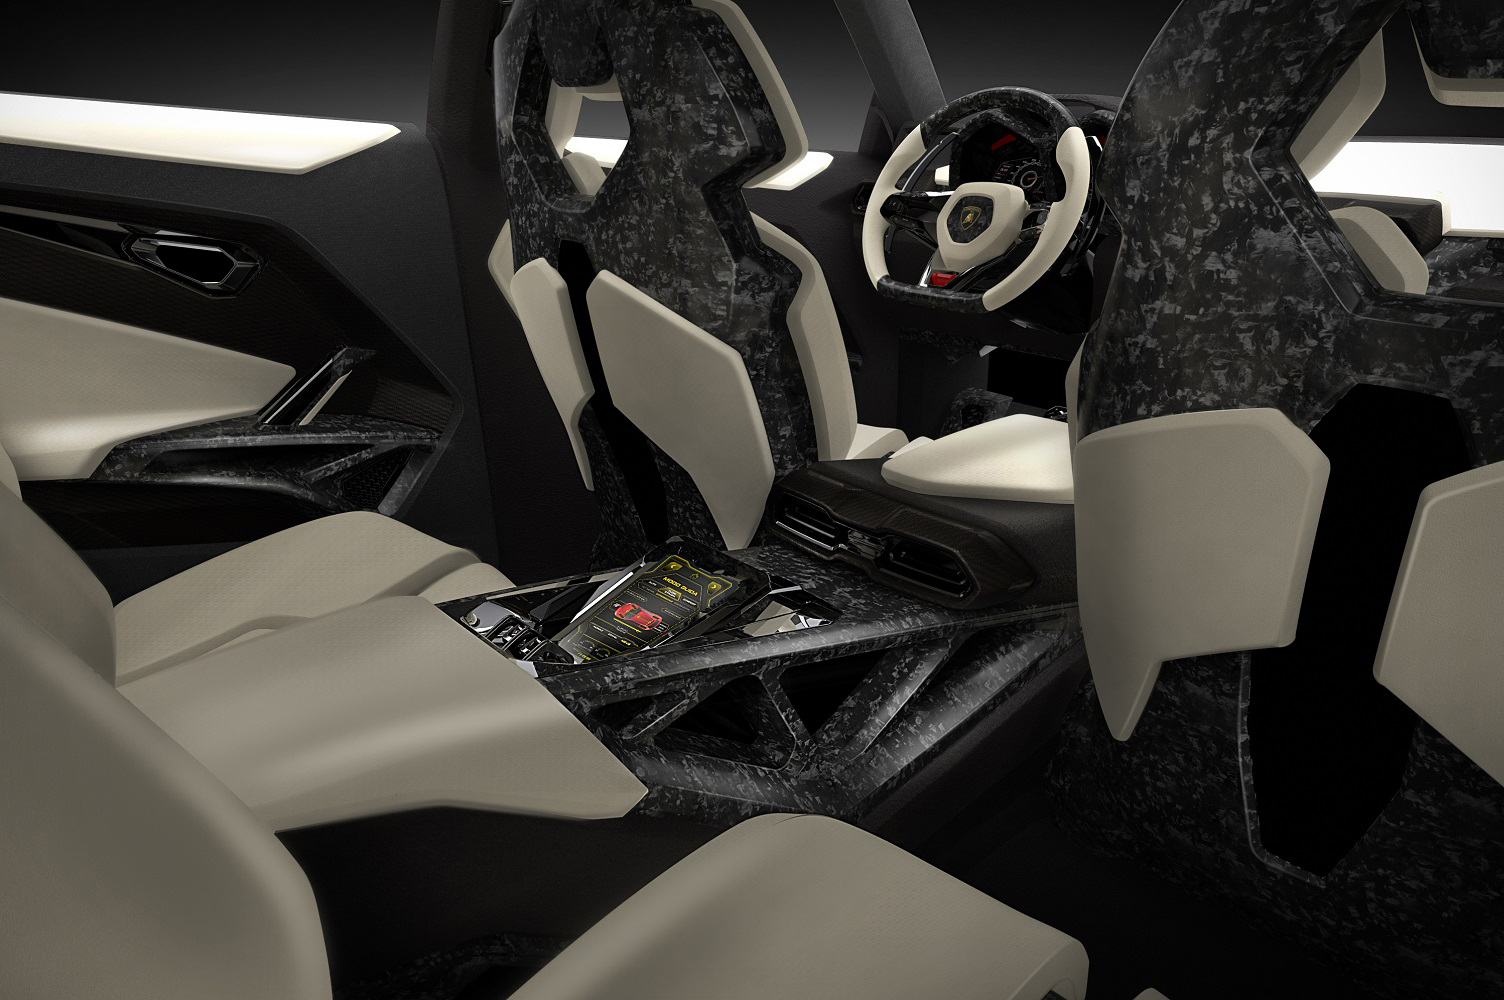 2012 Lamborghini Urus SUV concept